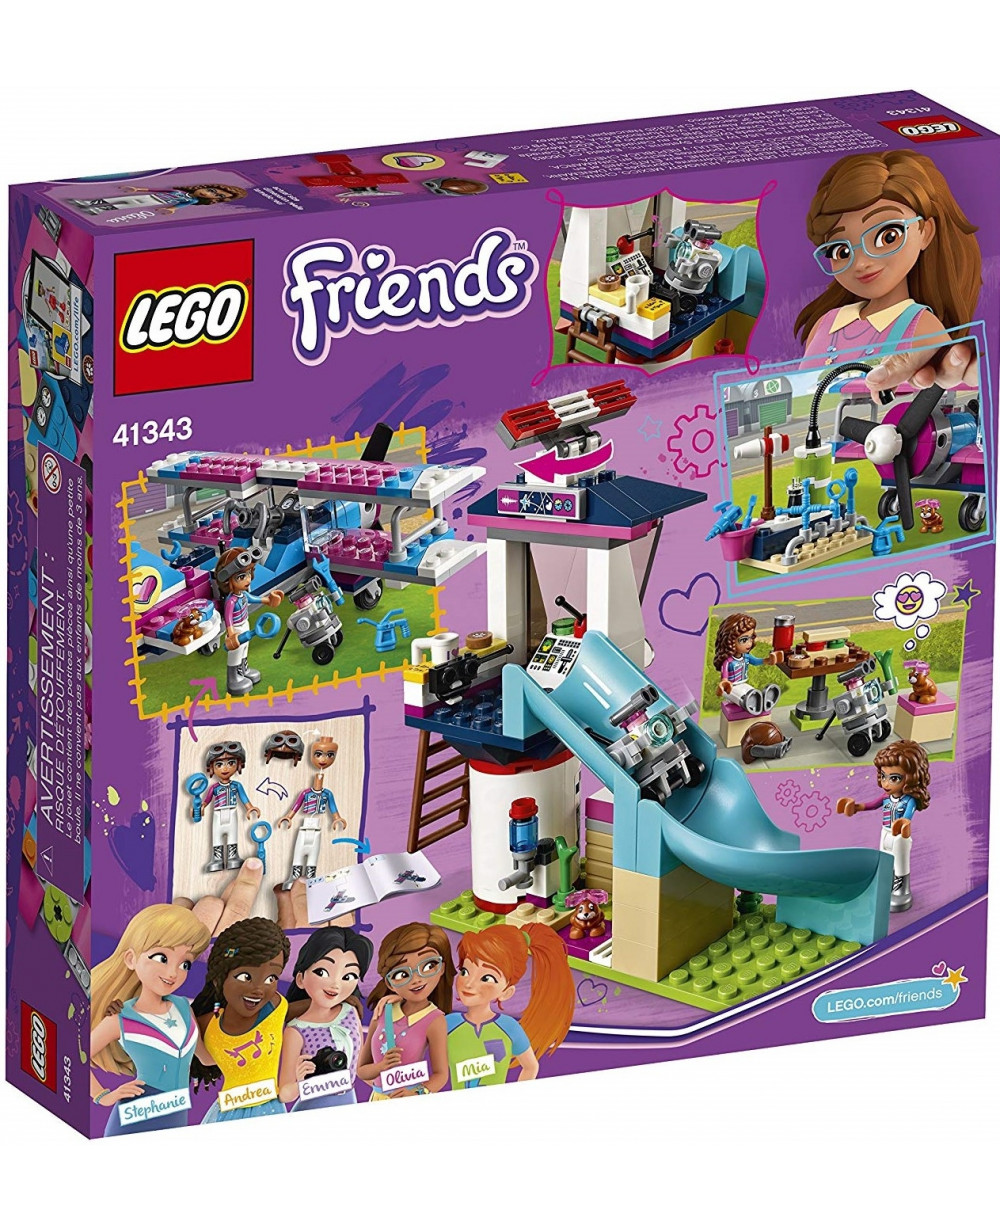 LEGO® Friends Andrea's Accessories Store 41344 294 Pcs